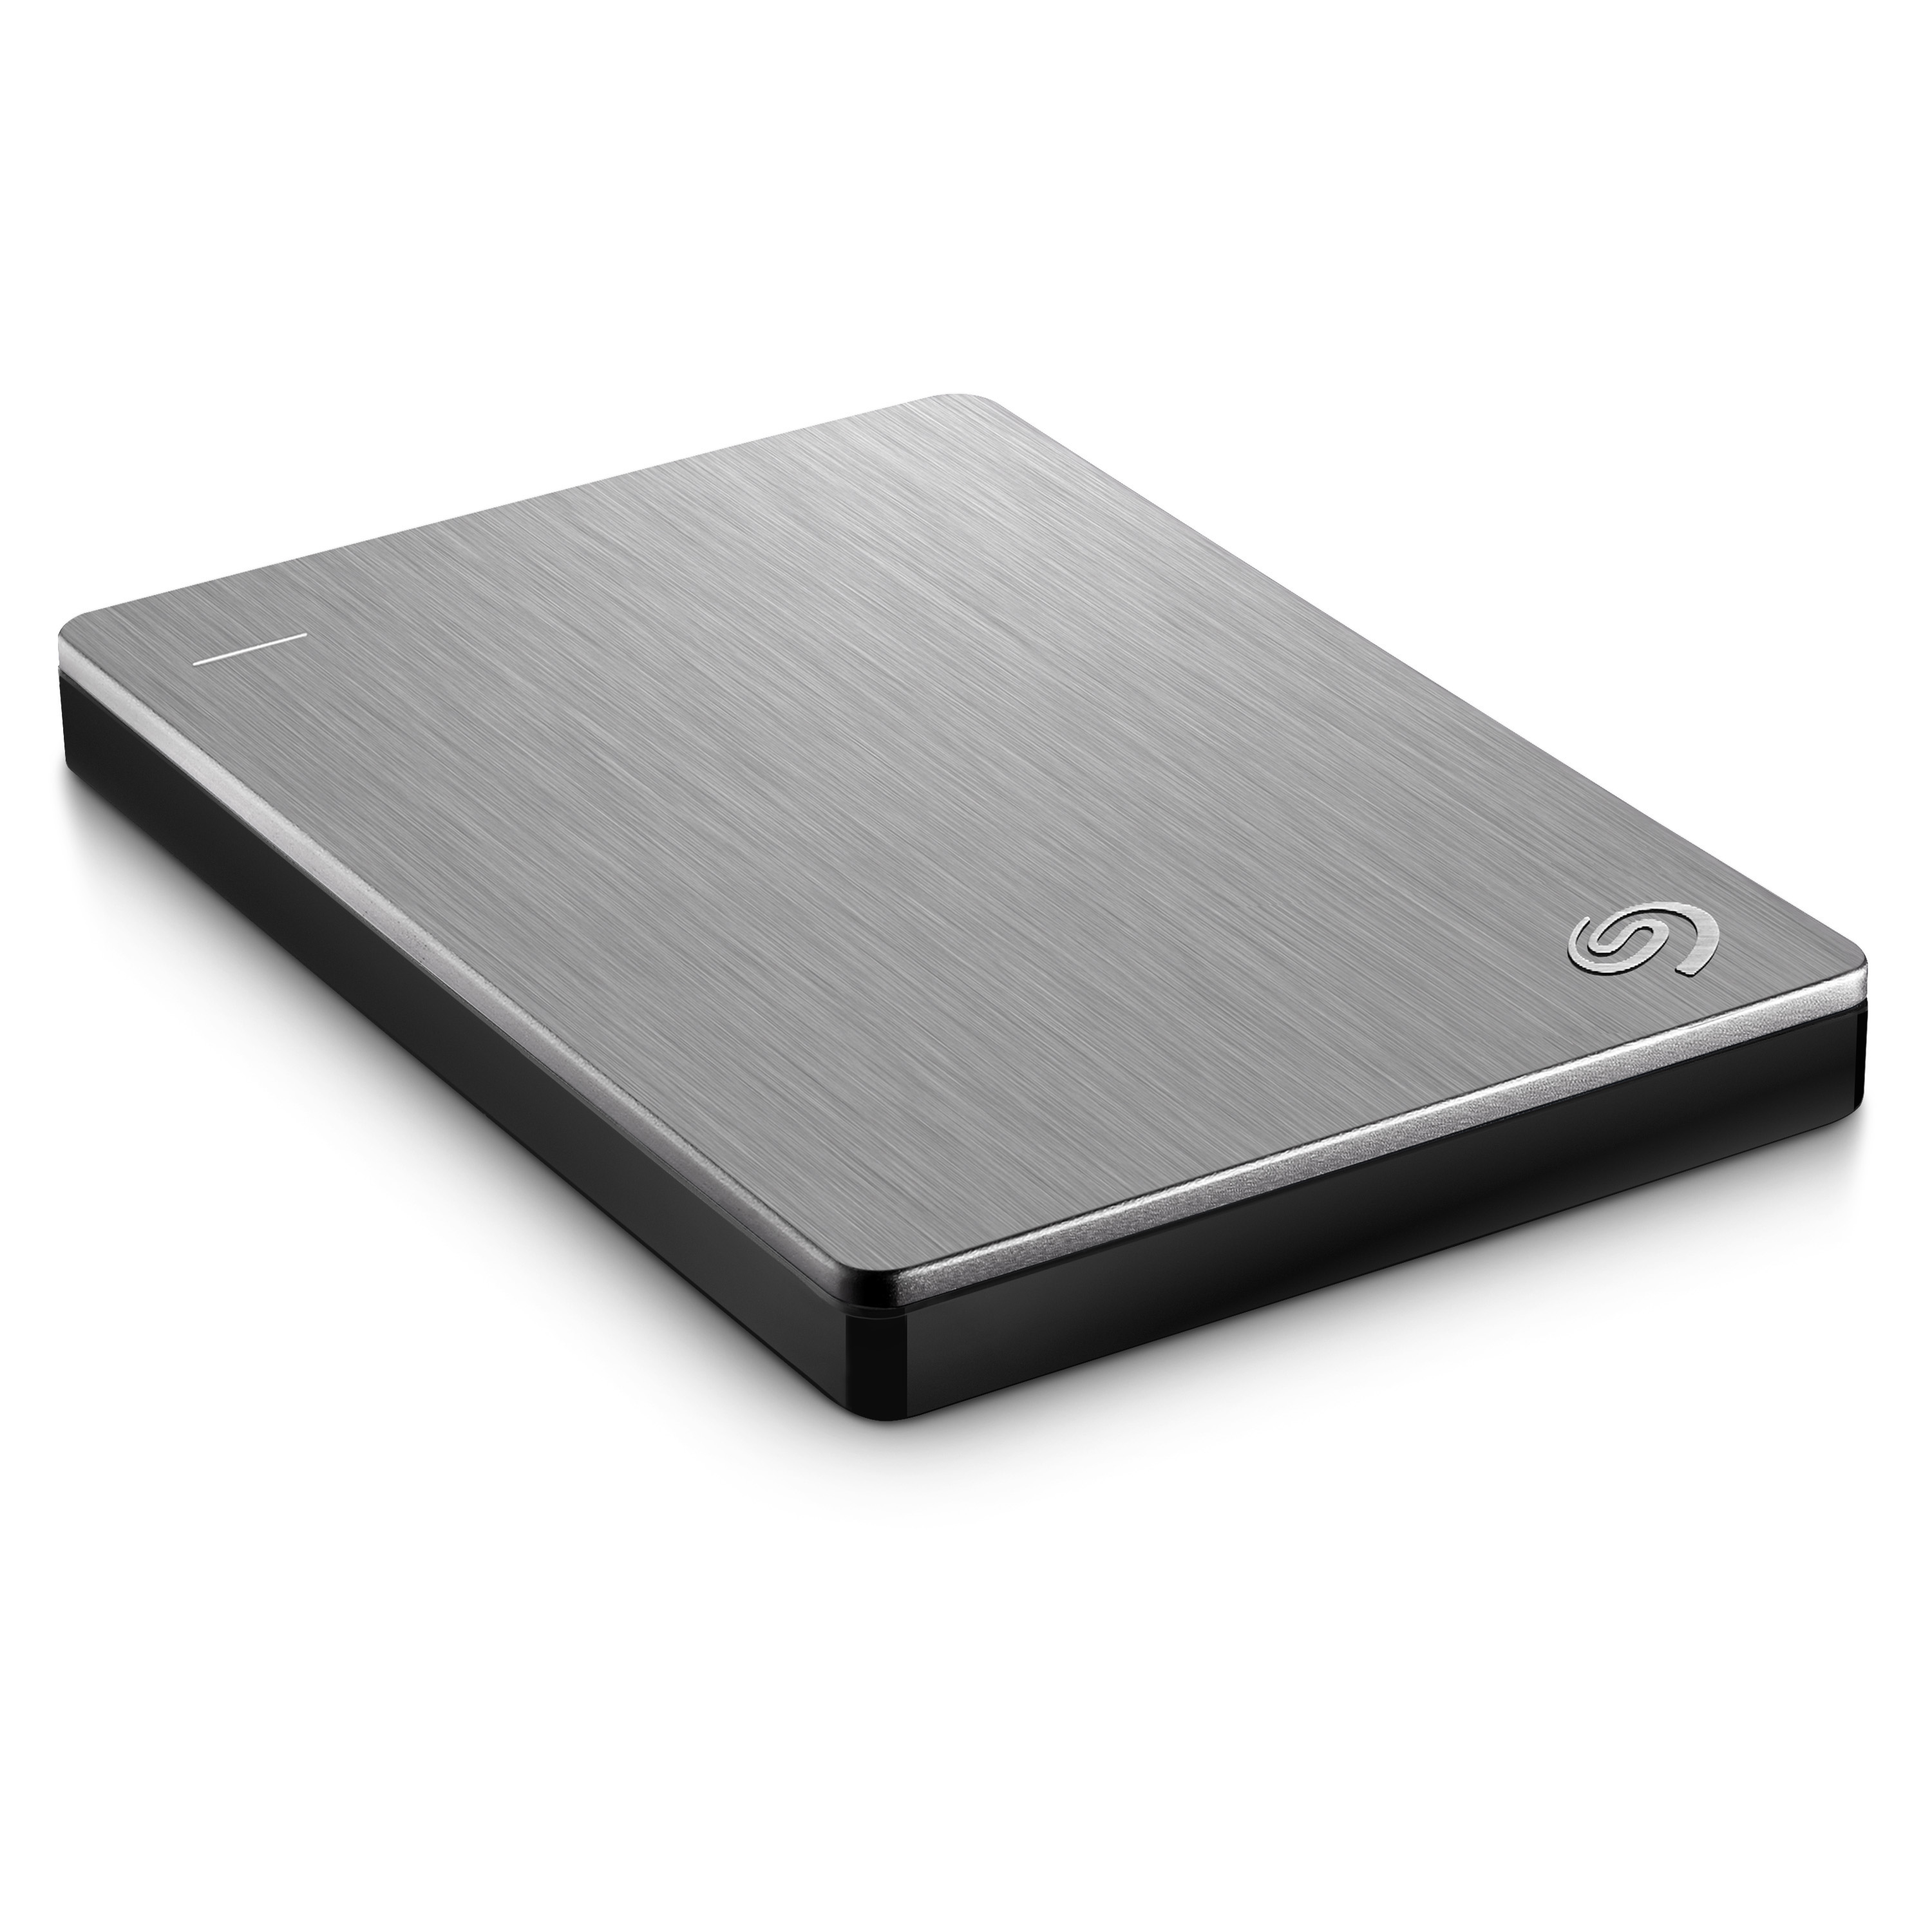 SEAGATE Backup Plus 1 HDD, extern, Silber Zoll, 2,5 TB Festplatte